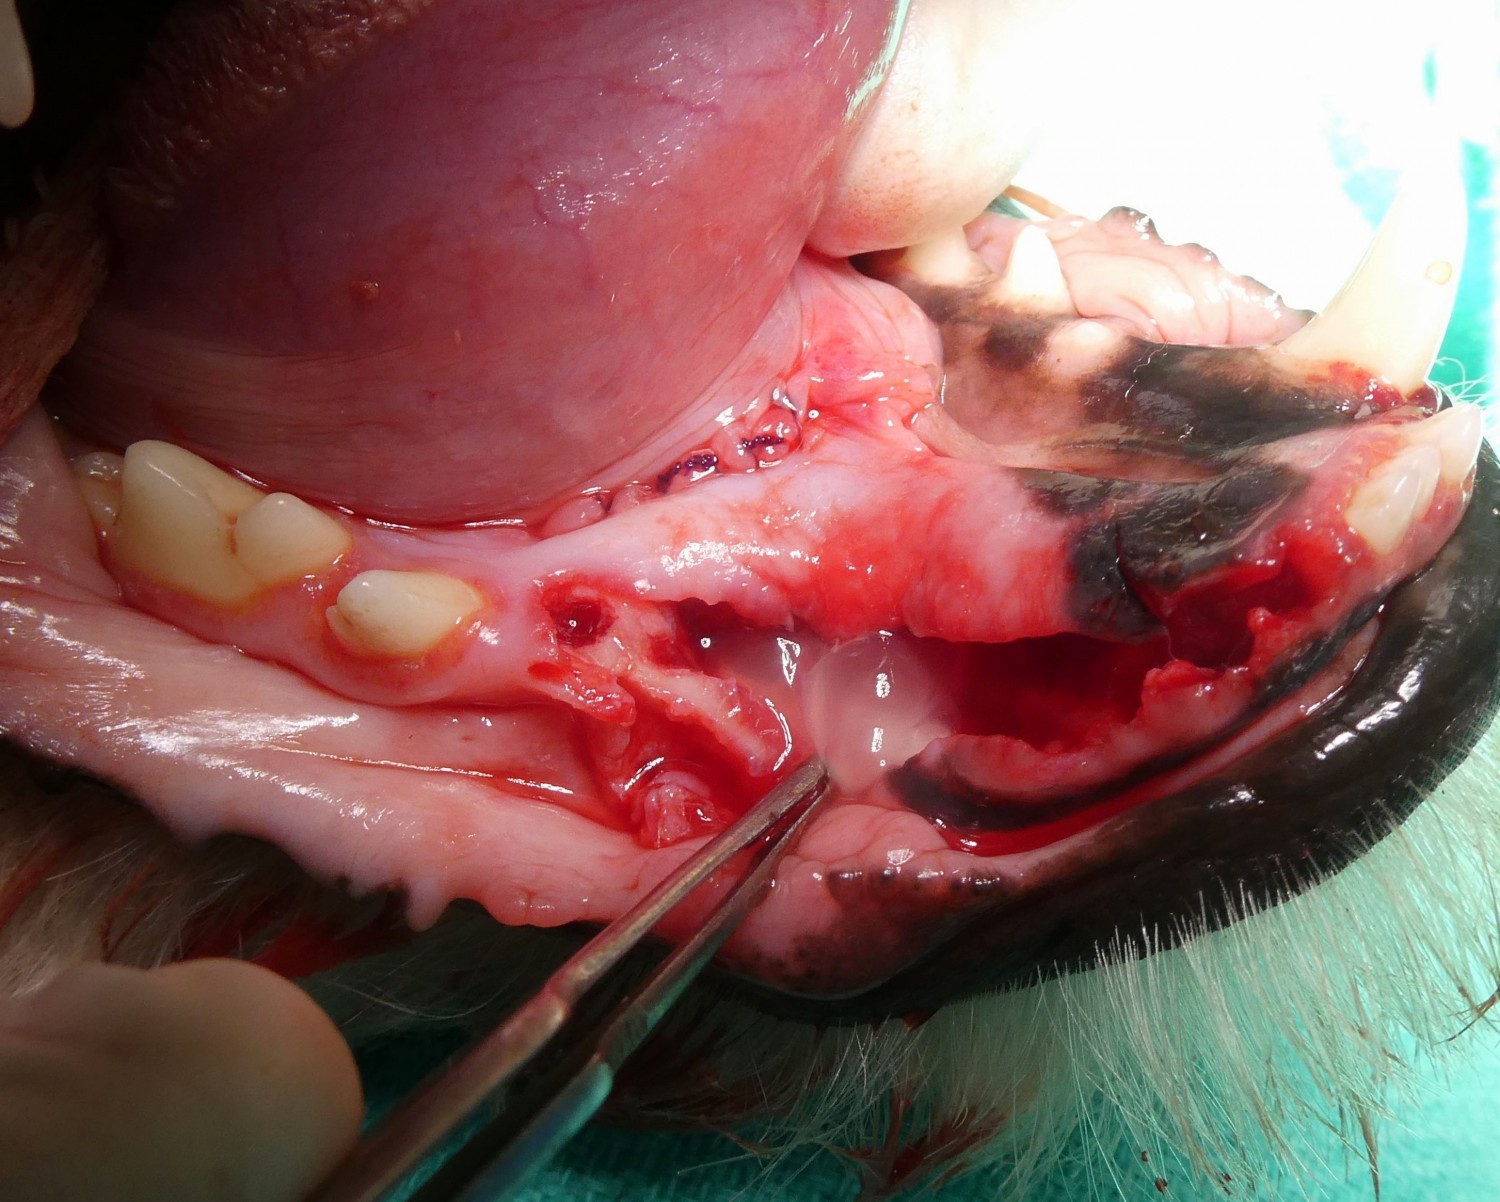 Odontogenic cyst